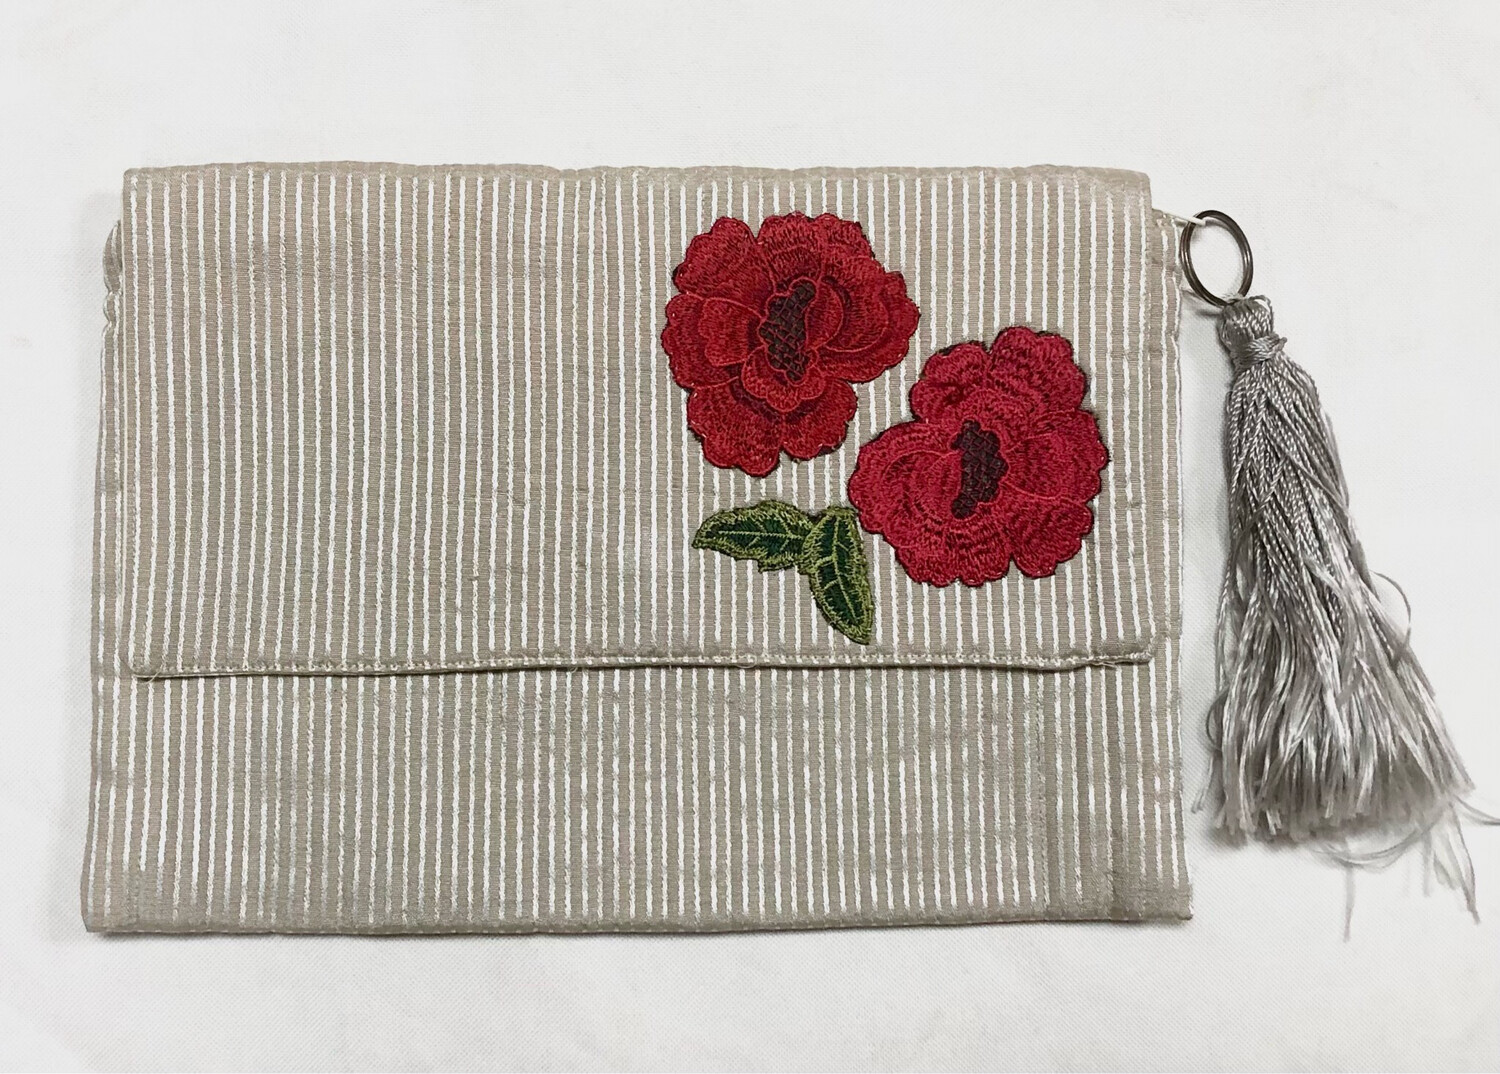 Fabric Clutch Bag With Applique / 20*30 cm / شنطة يد قماش بأبليك